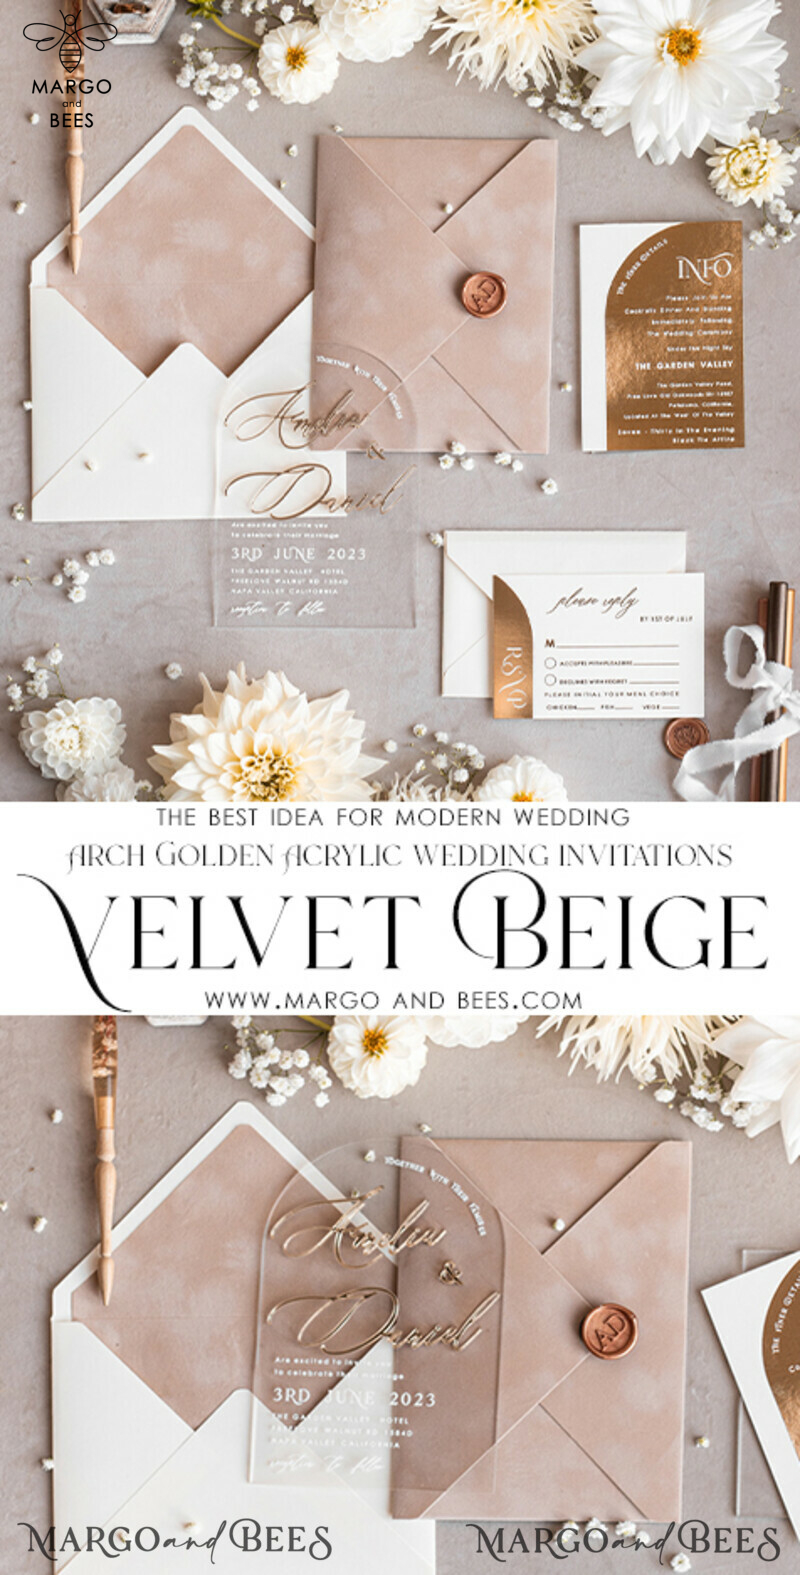 Elegant Arch Golden Acrylic Wedding Invitation Suite with Velvet Beige and Glamour Plexi Glass Details-3